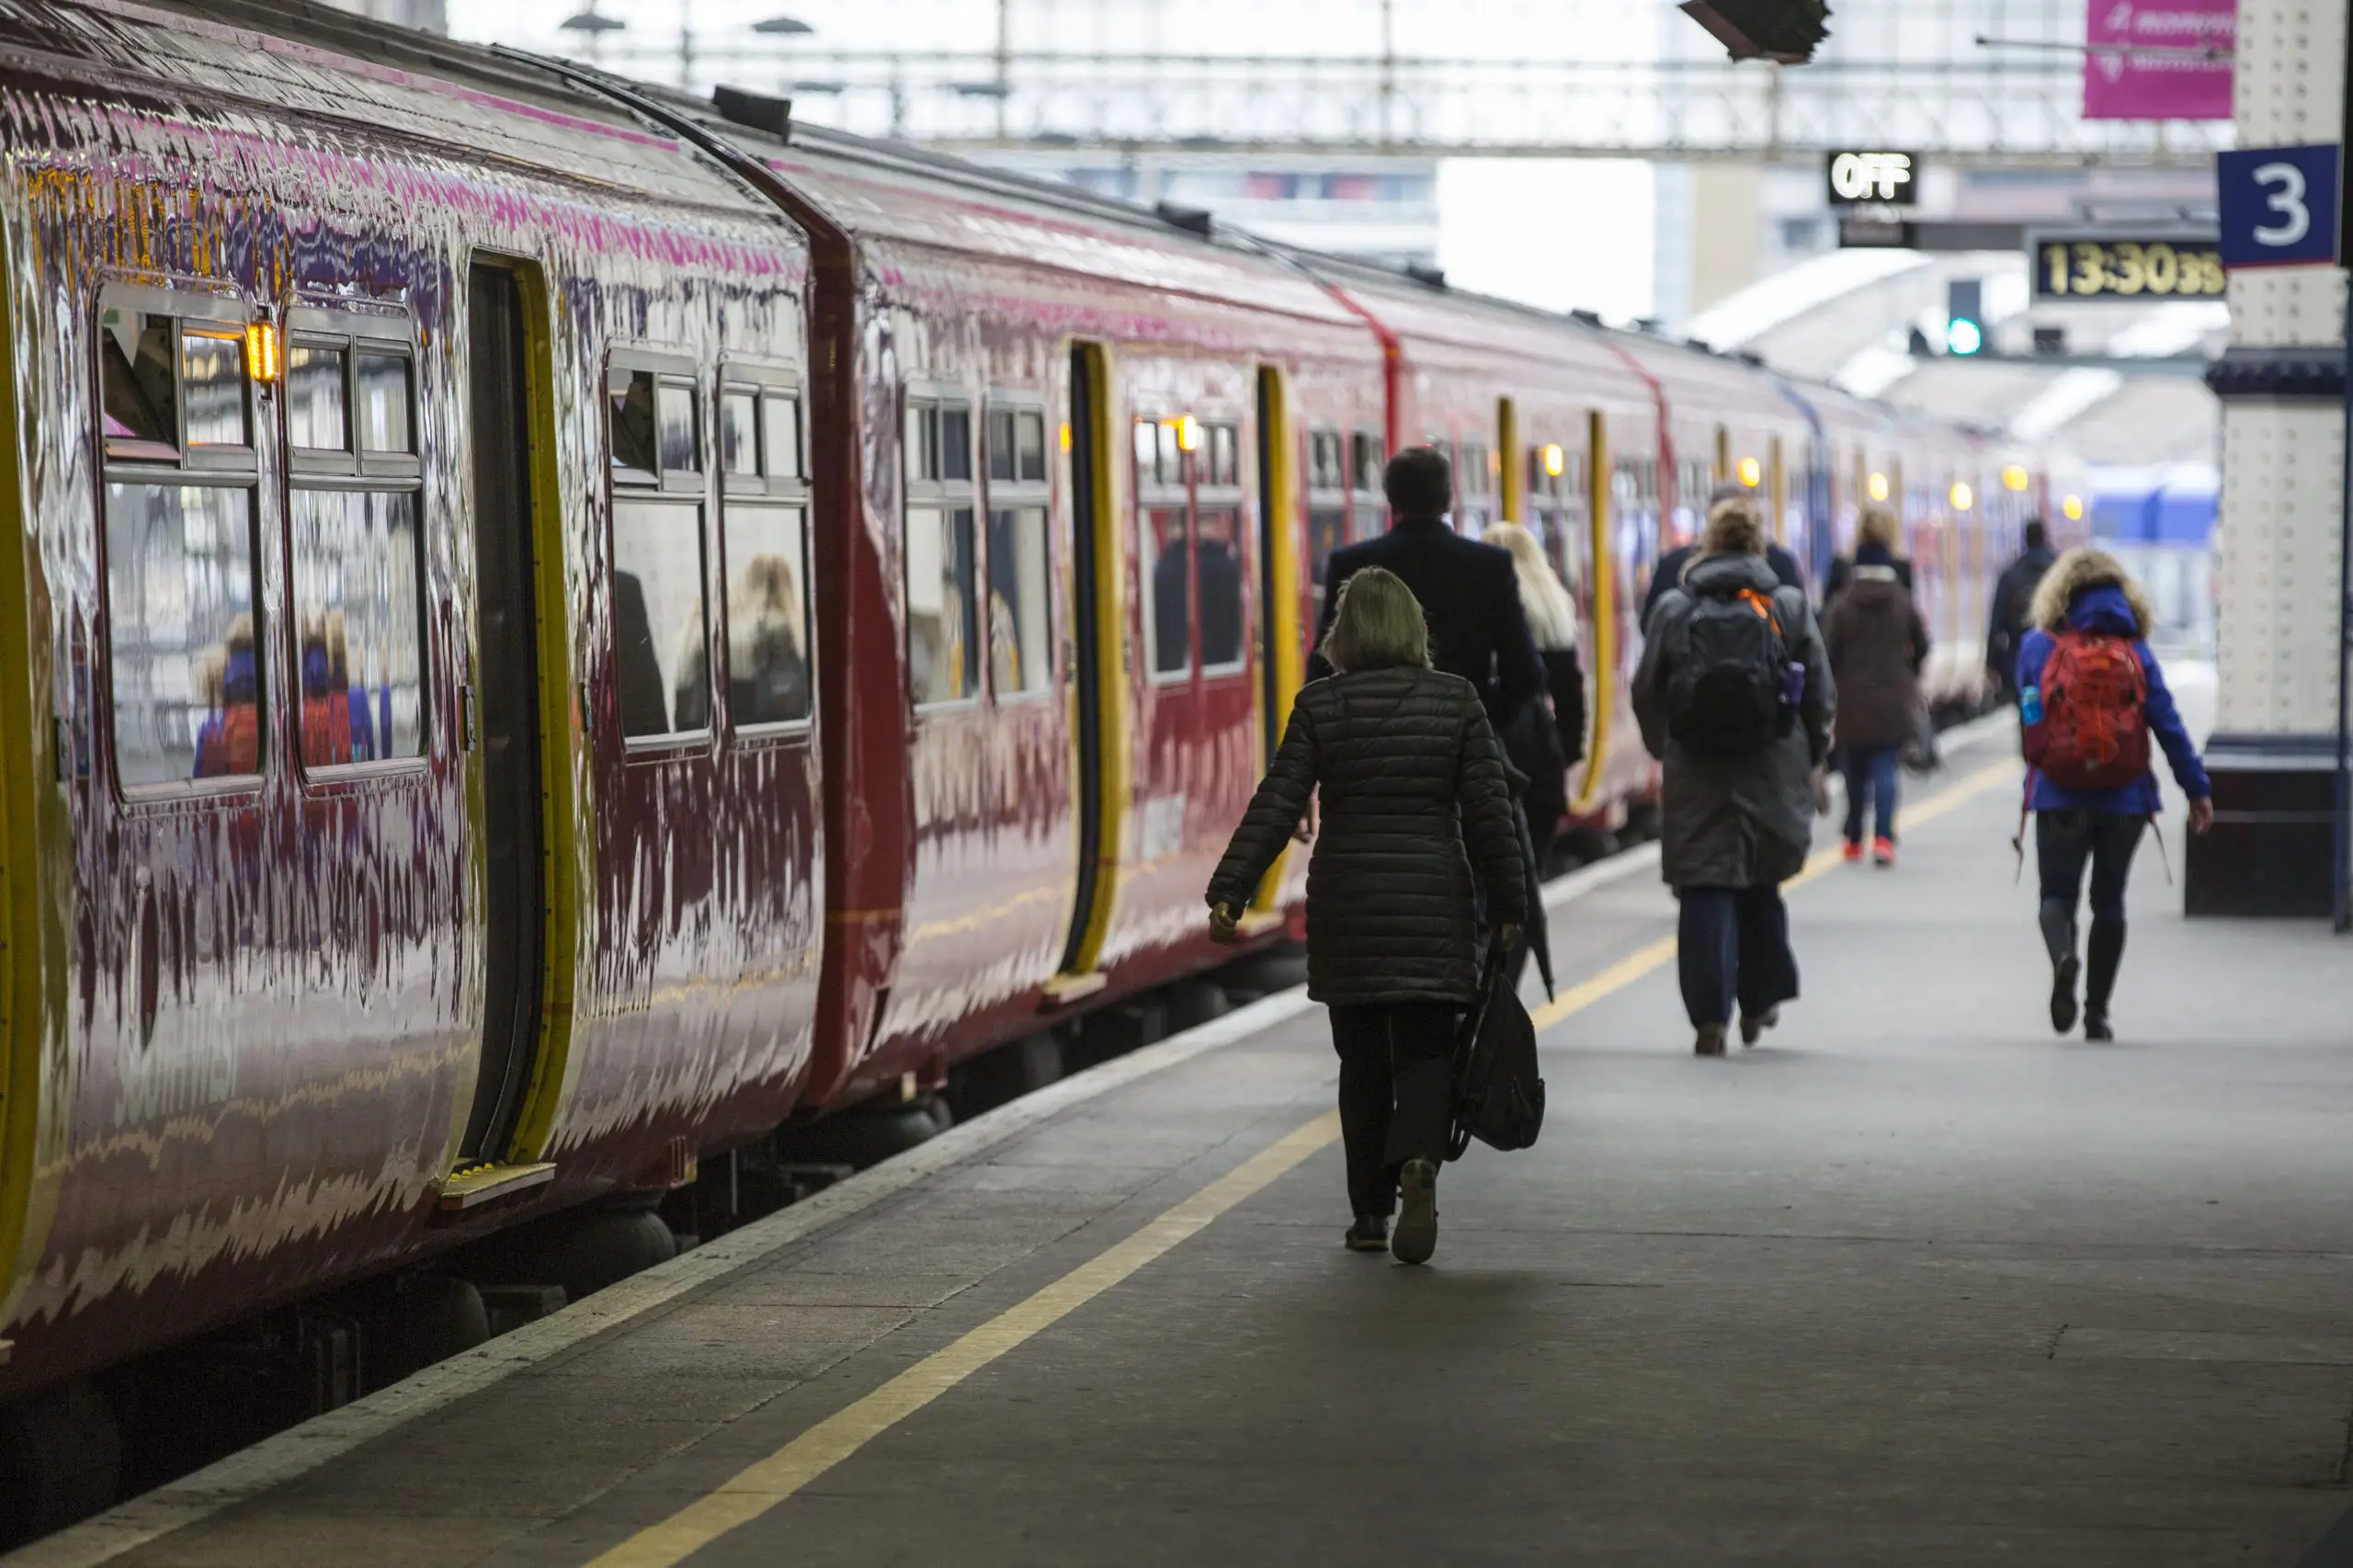 Train on platform with departing passengers at Waterloo Station, London, UK.